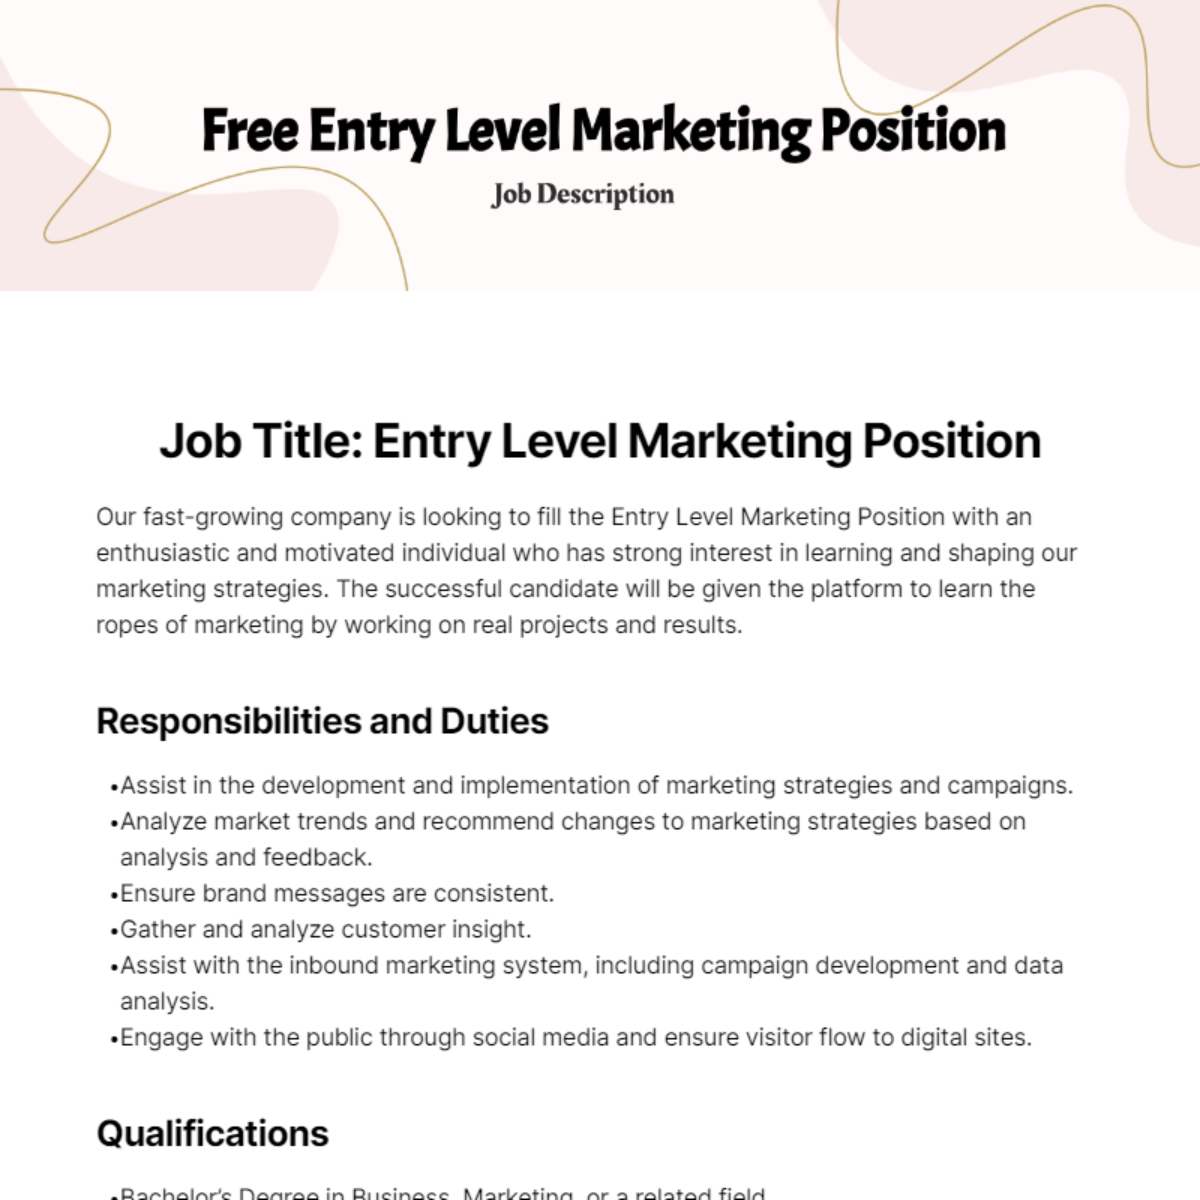 Free Entry Level Marketing Job Description Template